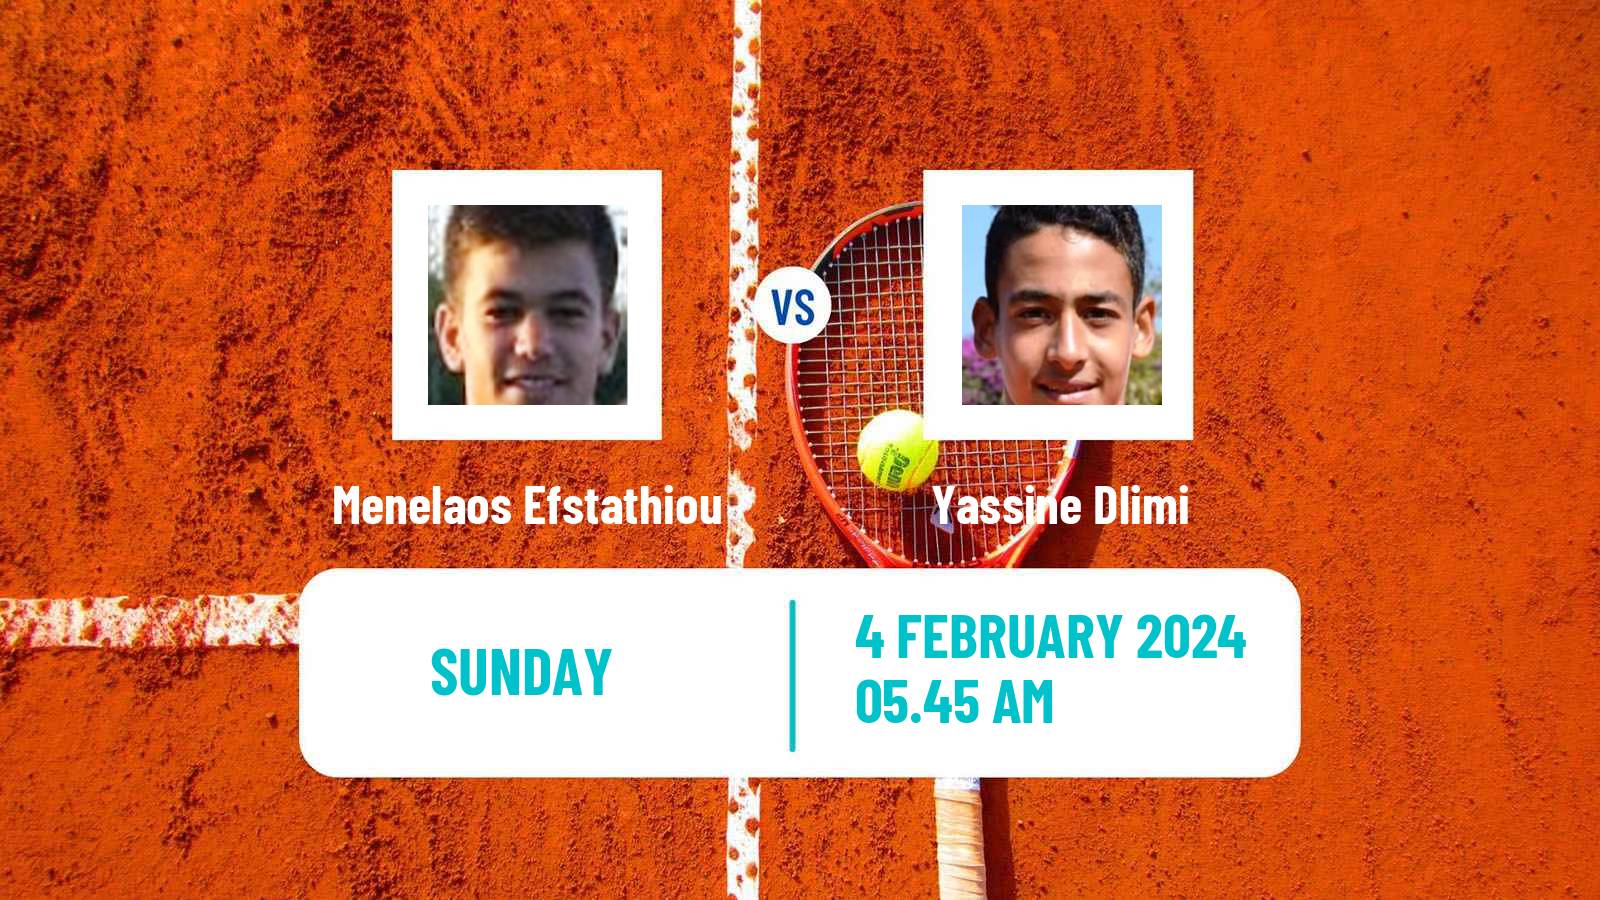 Tennis Davis Cup World Group II Menelaos Efstathiou - Yassine Dlimi